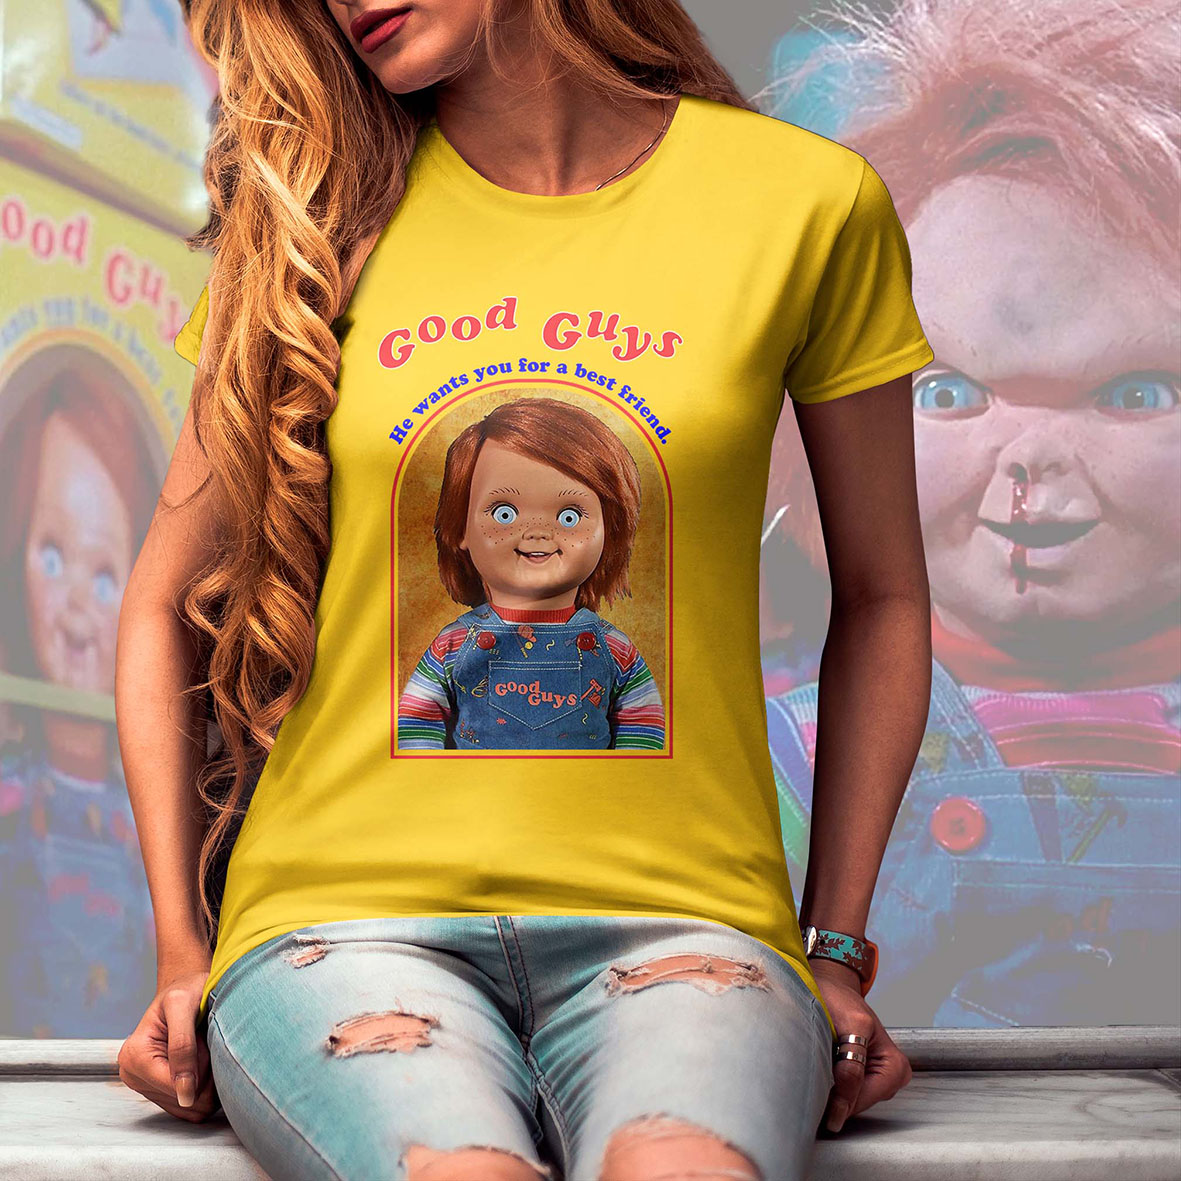 Camiseta Feminina Unissex Good Guys Chucky Brinquedo Assassino Boneco Child's Play (Amarela) - EV